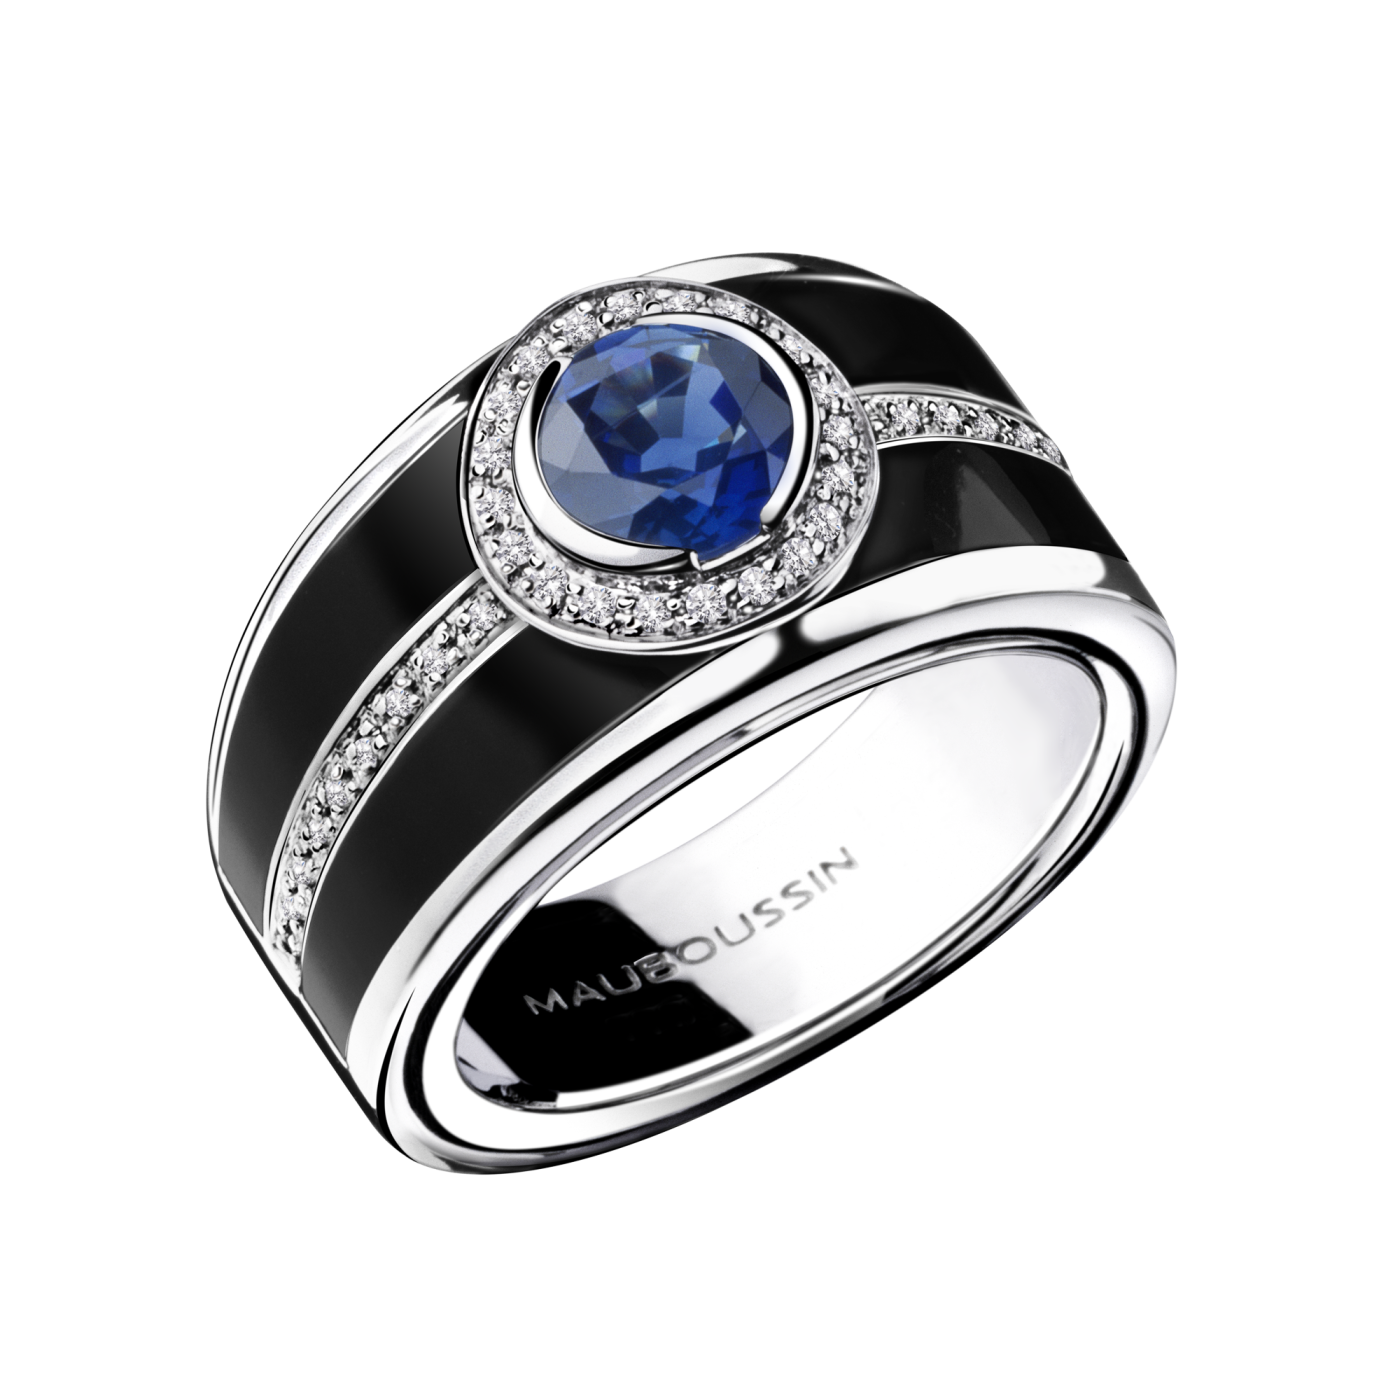 Mauboussin Bonbon Bleu ring